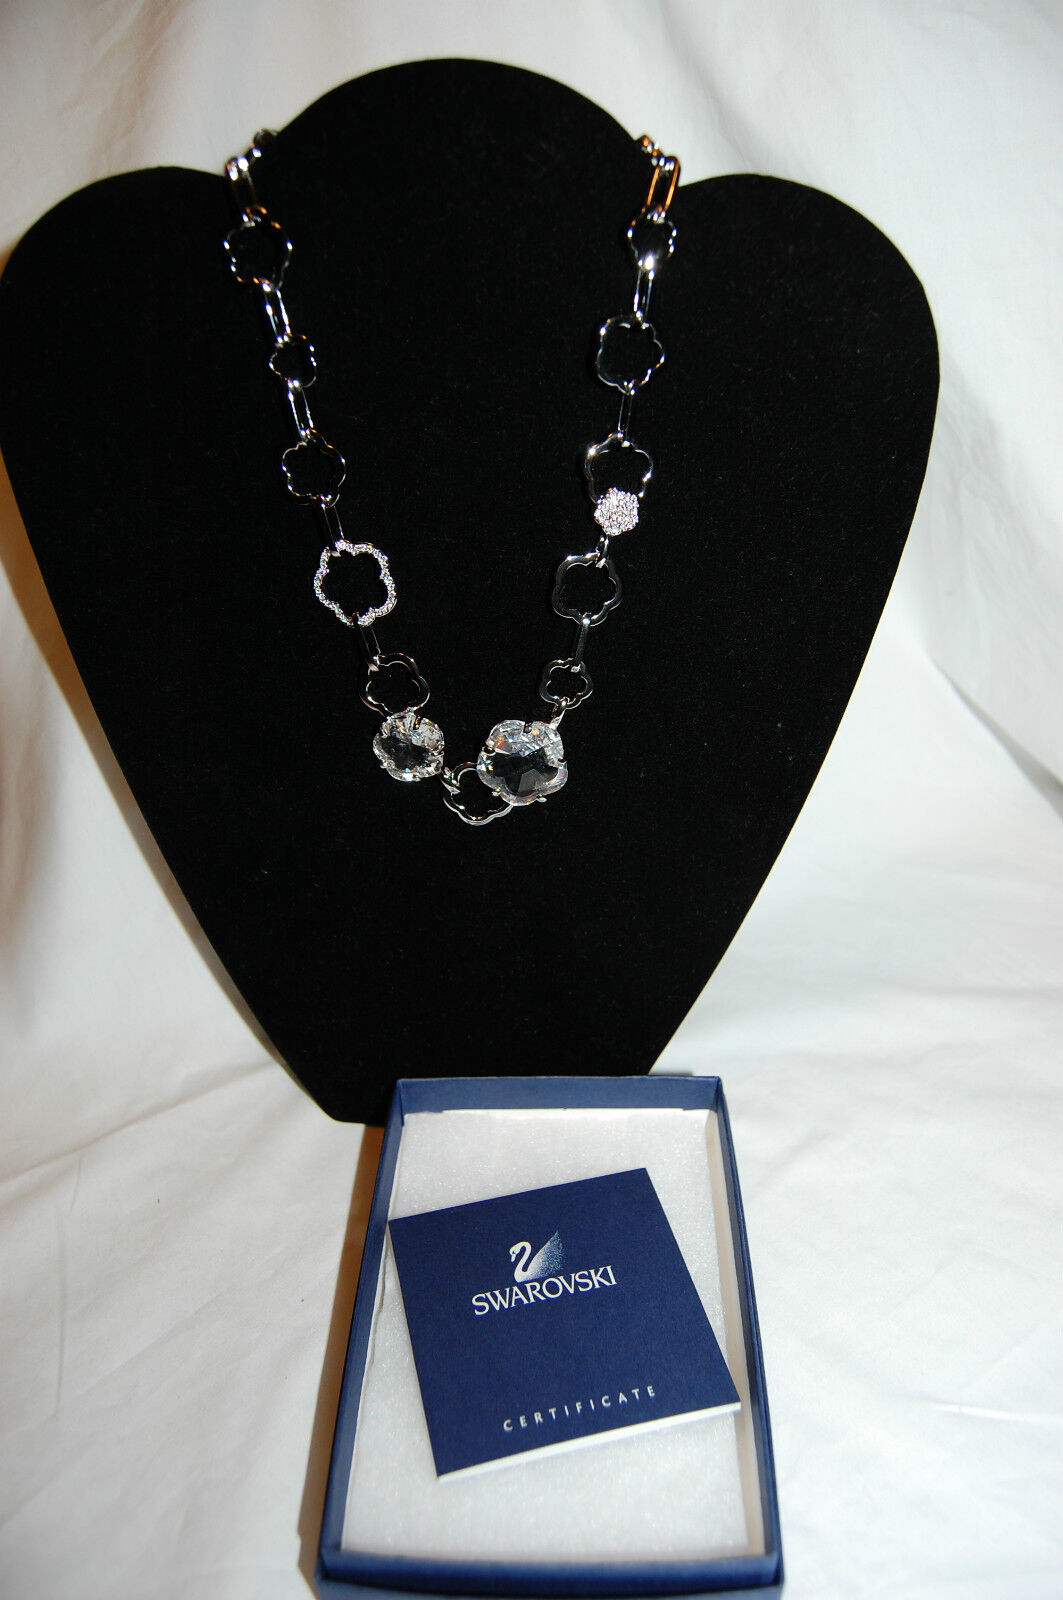 SWAROVSKI Cherry Blossom necklace 894467 BEST OFFERS CONSIDERED